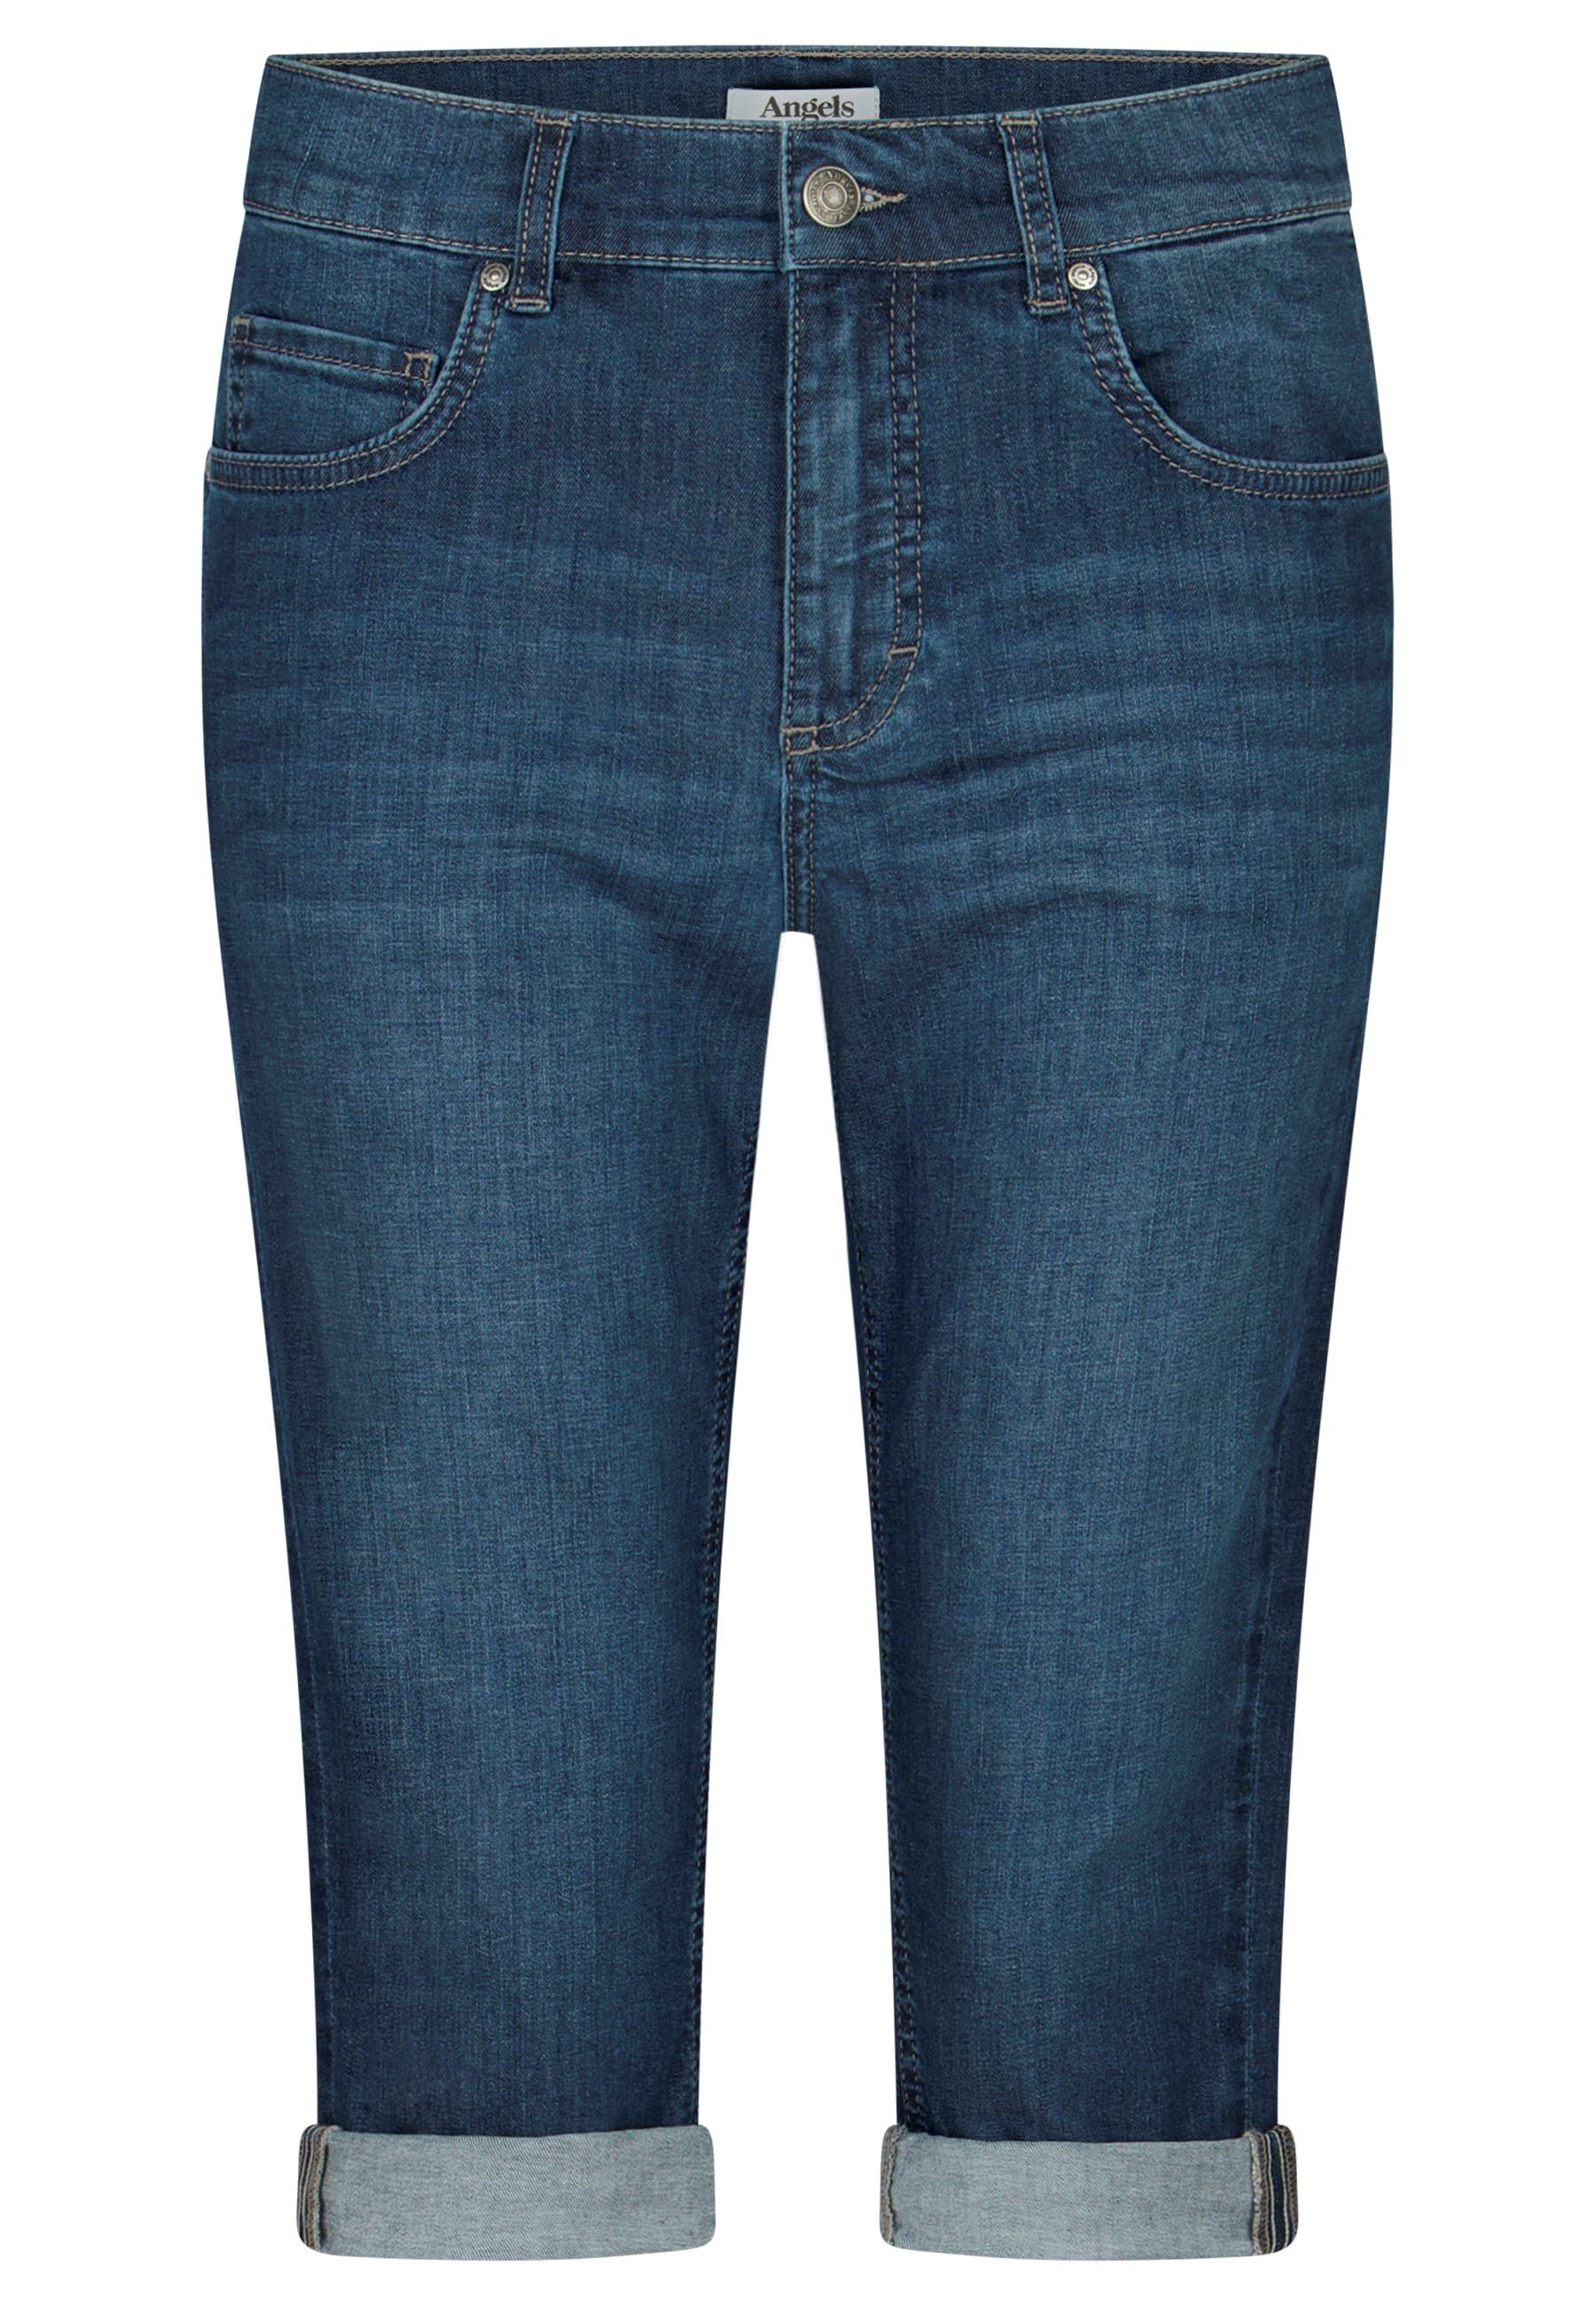 Capri Label-Applikationen blue mit TU ANGELS Jeans Used-Look mit 5-Pocket-Jeans